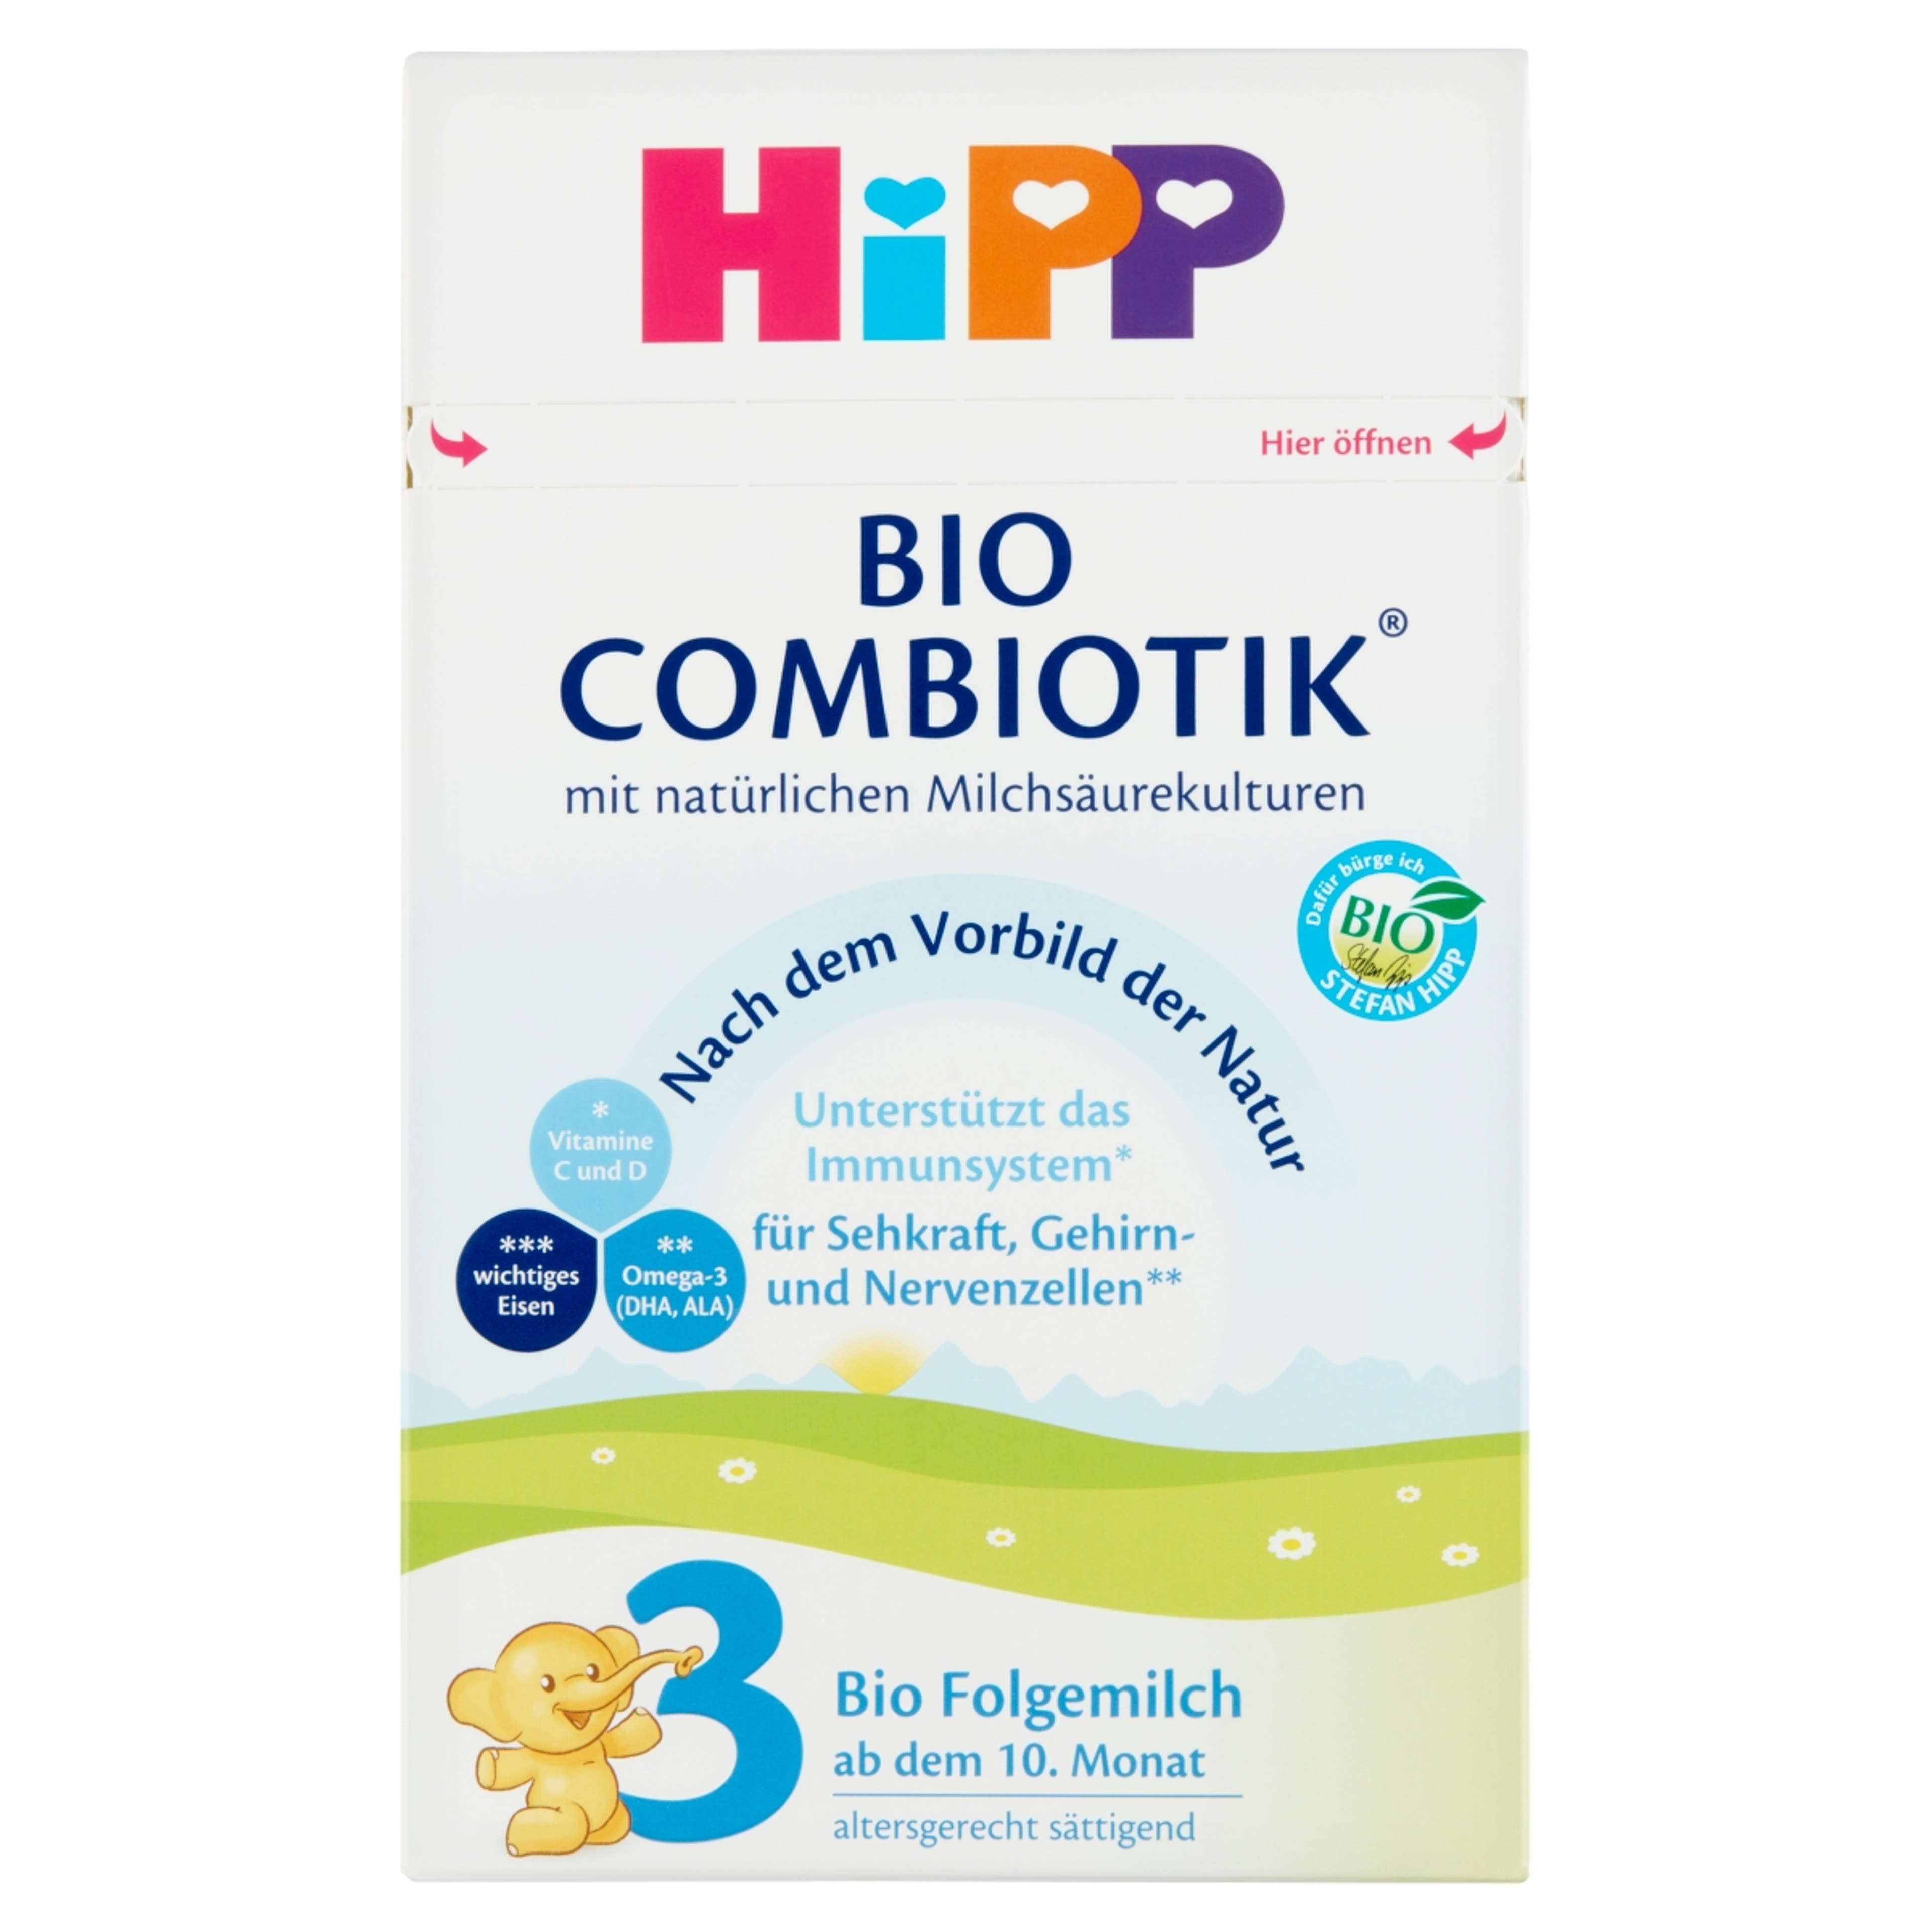 Hipp Bio Combiotik Tápszer 10 Hónapos Kortól - 600 g-1